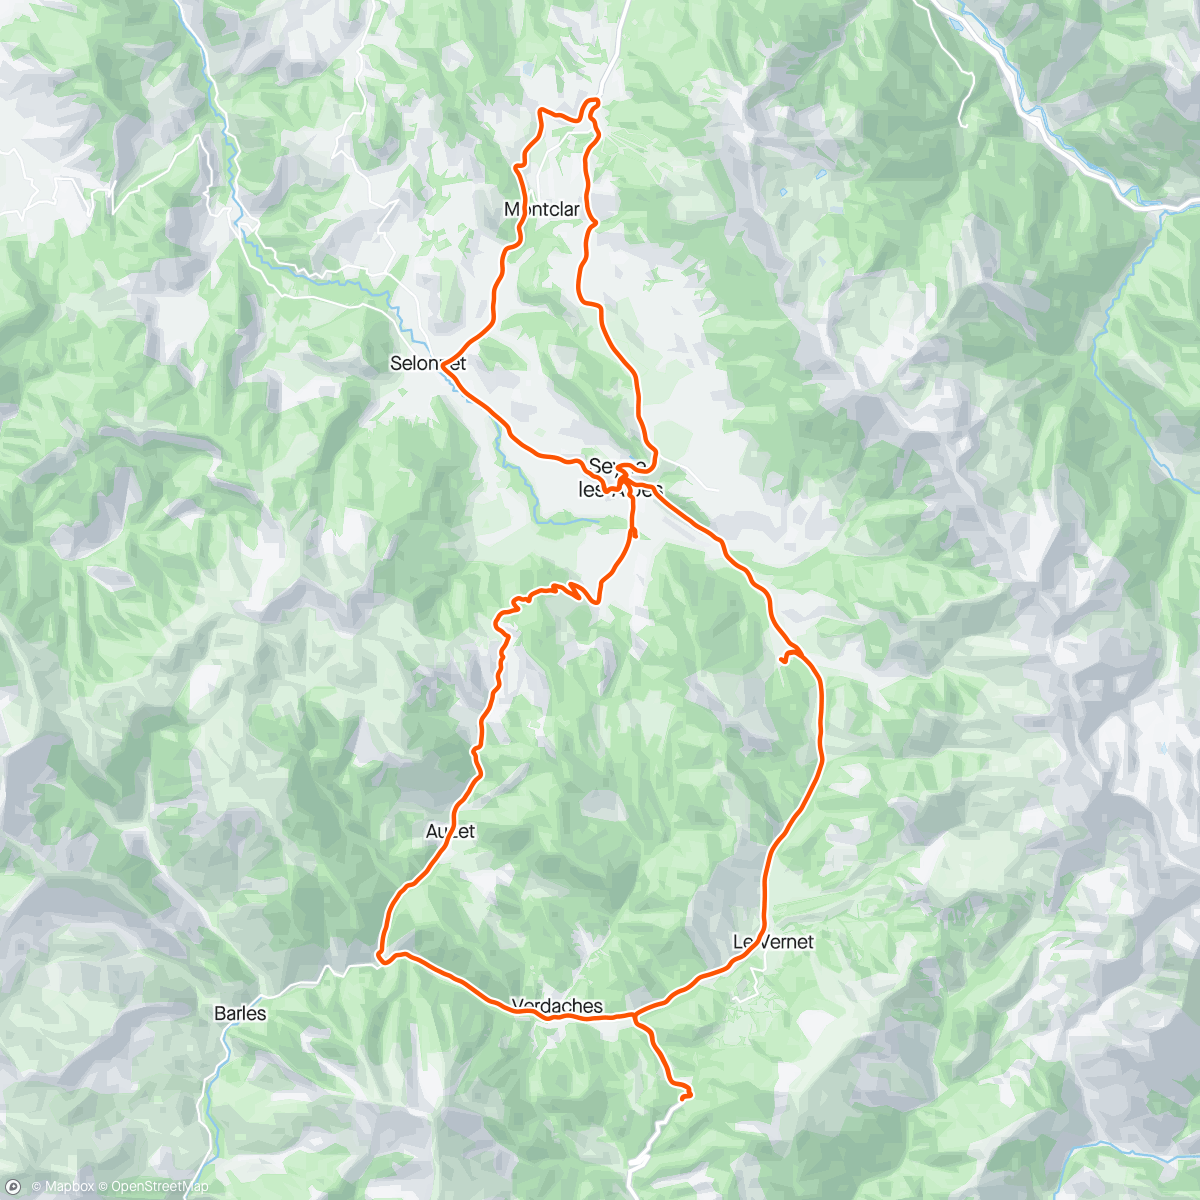 Map of the activity, Klimmetjes rondom camping